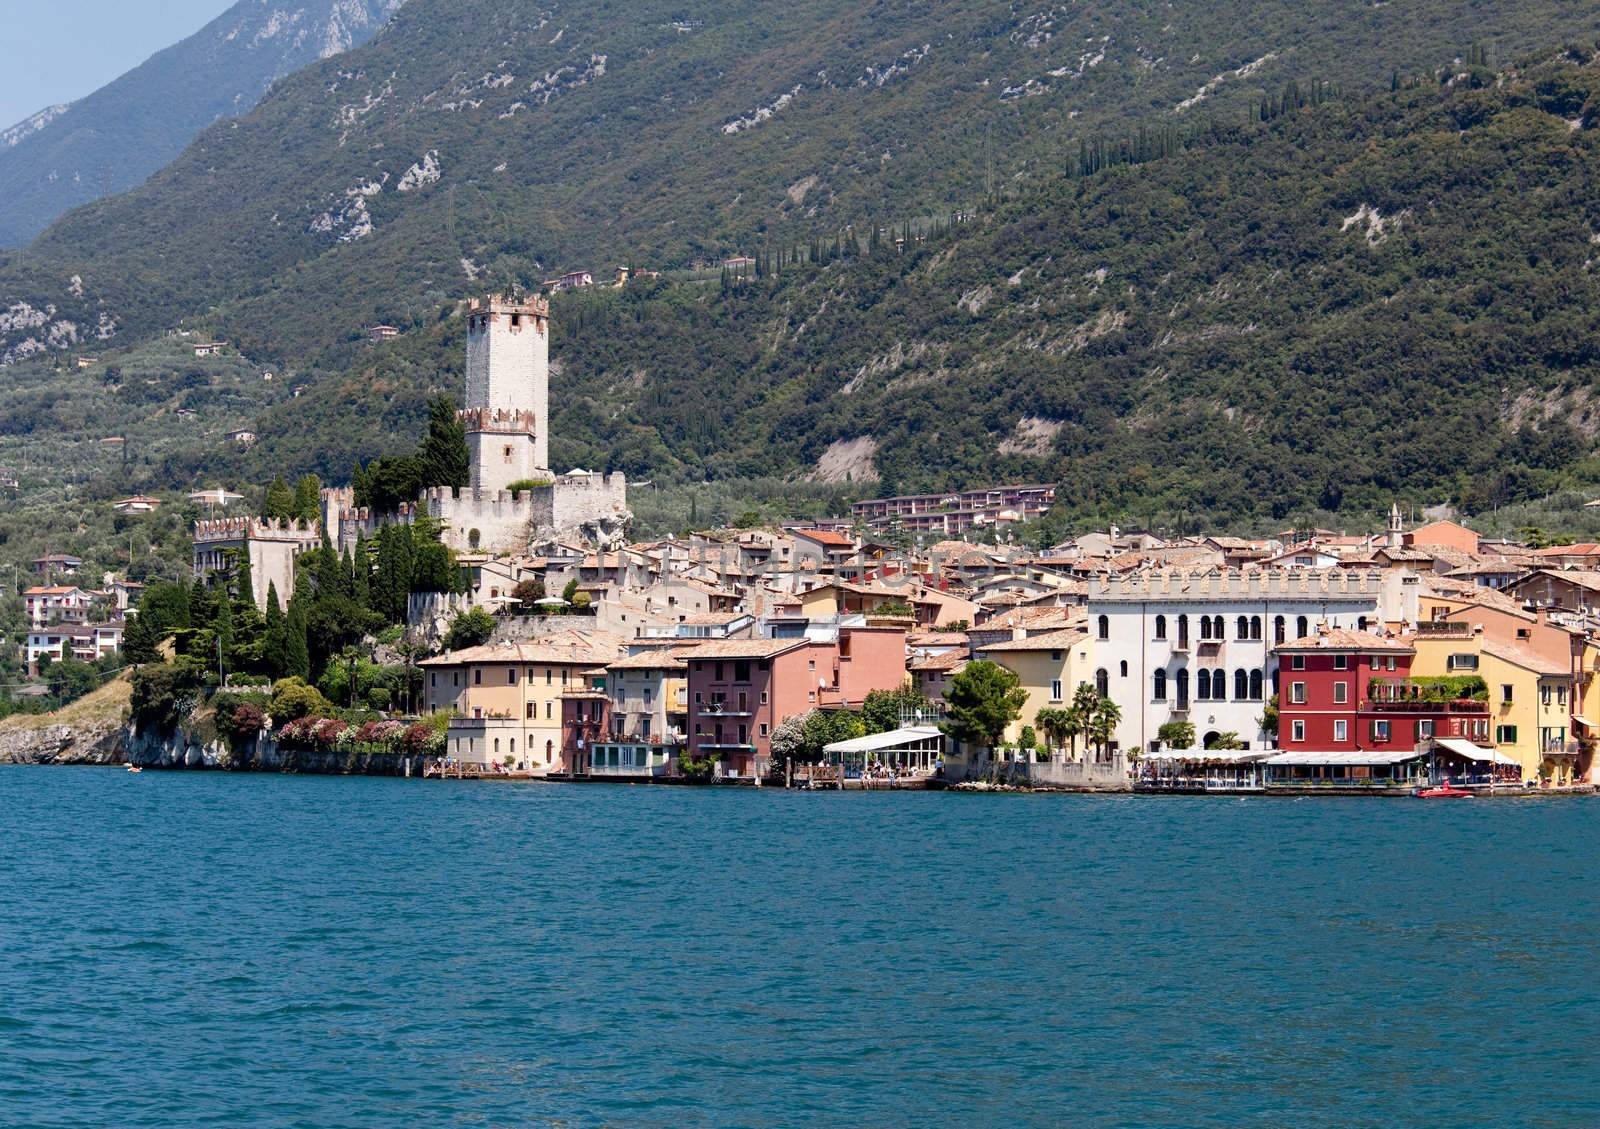 Malcesine on Lake Garda by steheap